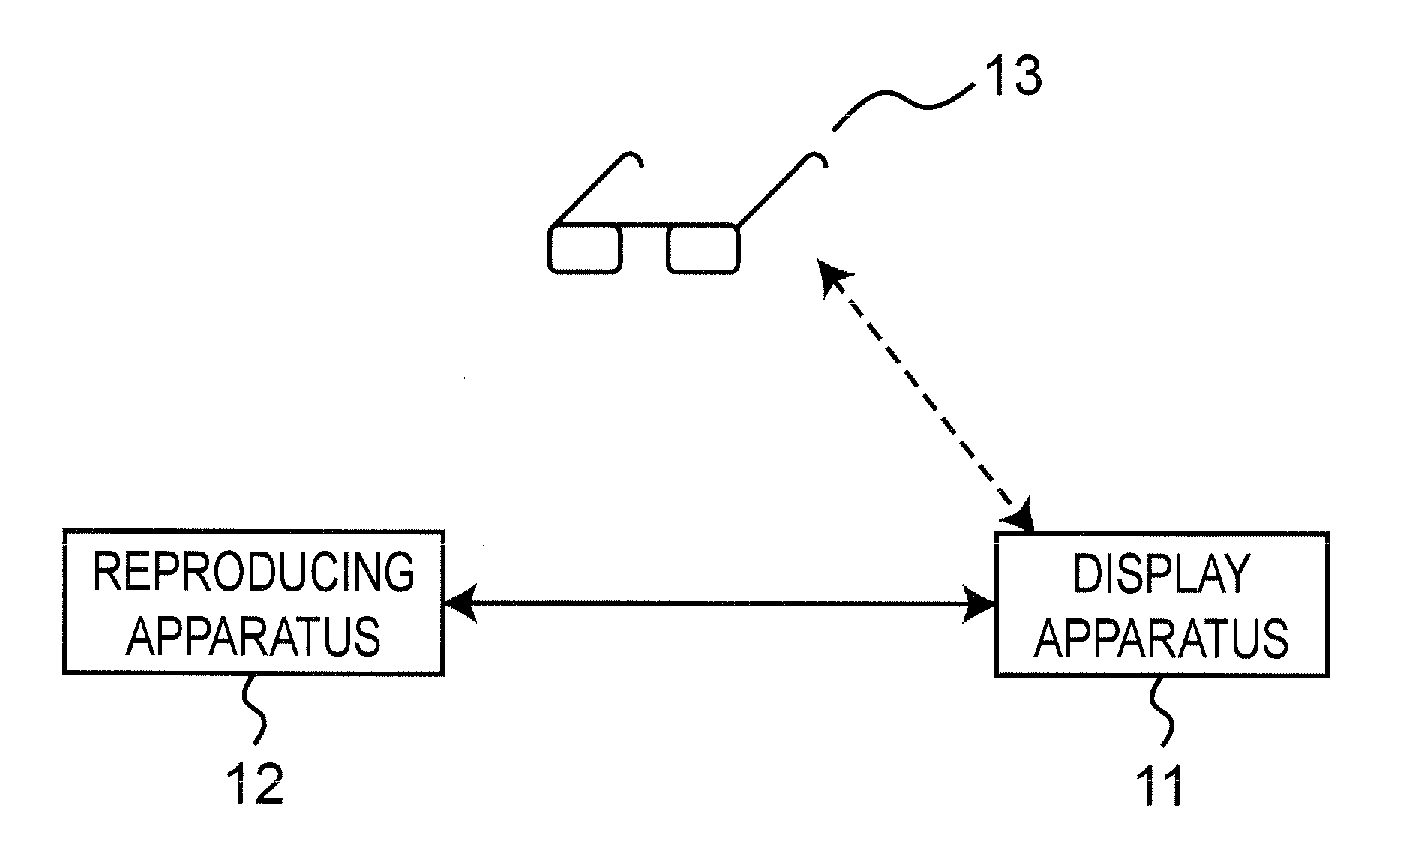 Image reproducing apparatus and image display apparatus